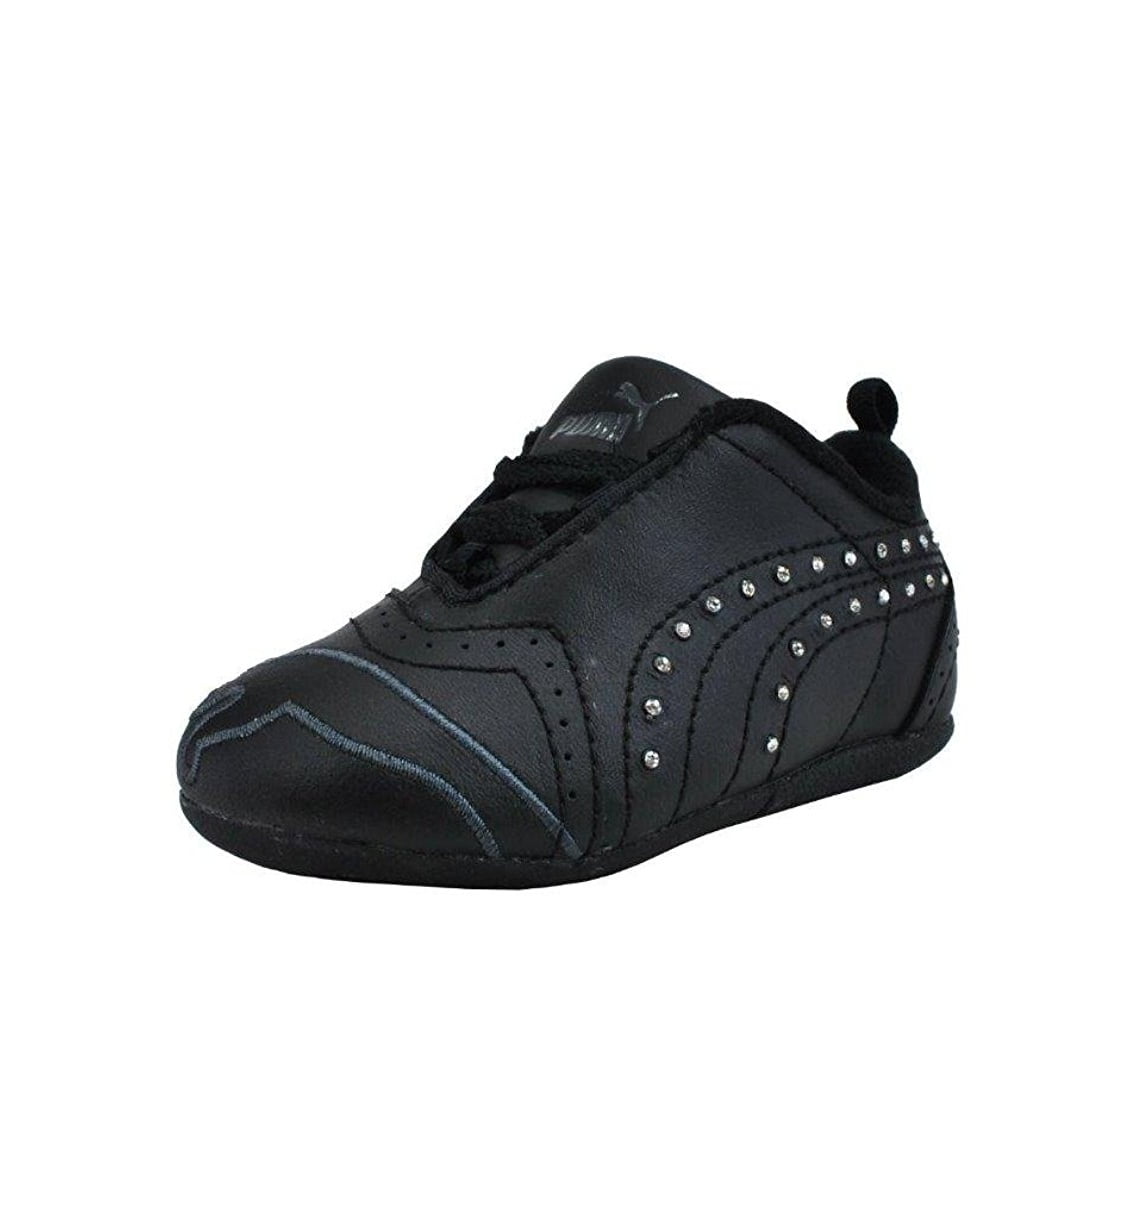 puma shoes for girls black